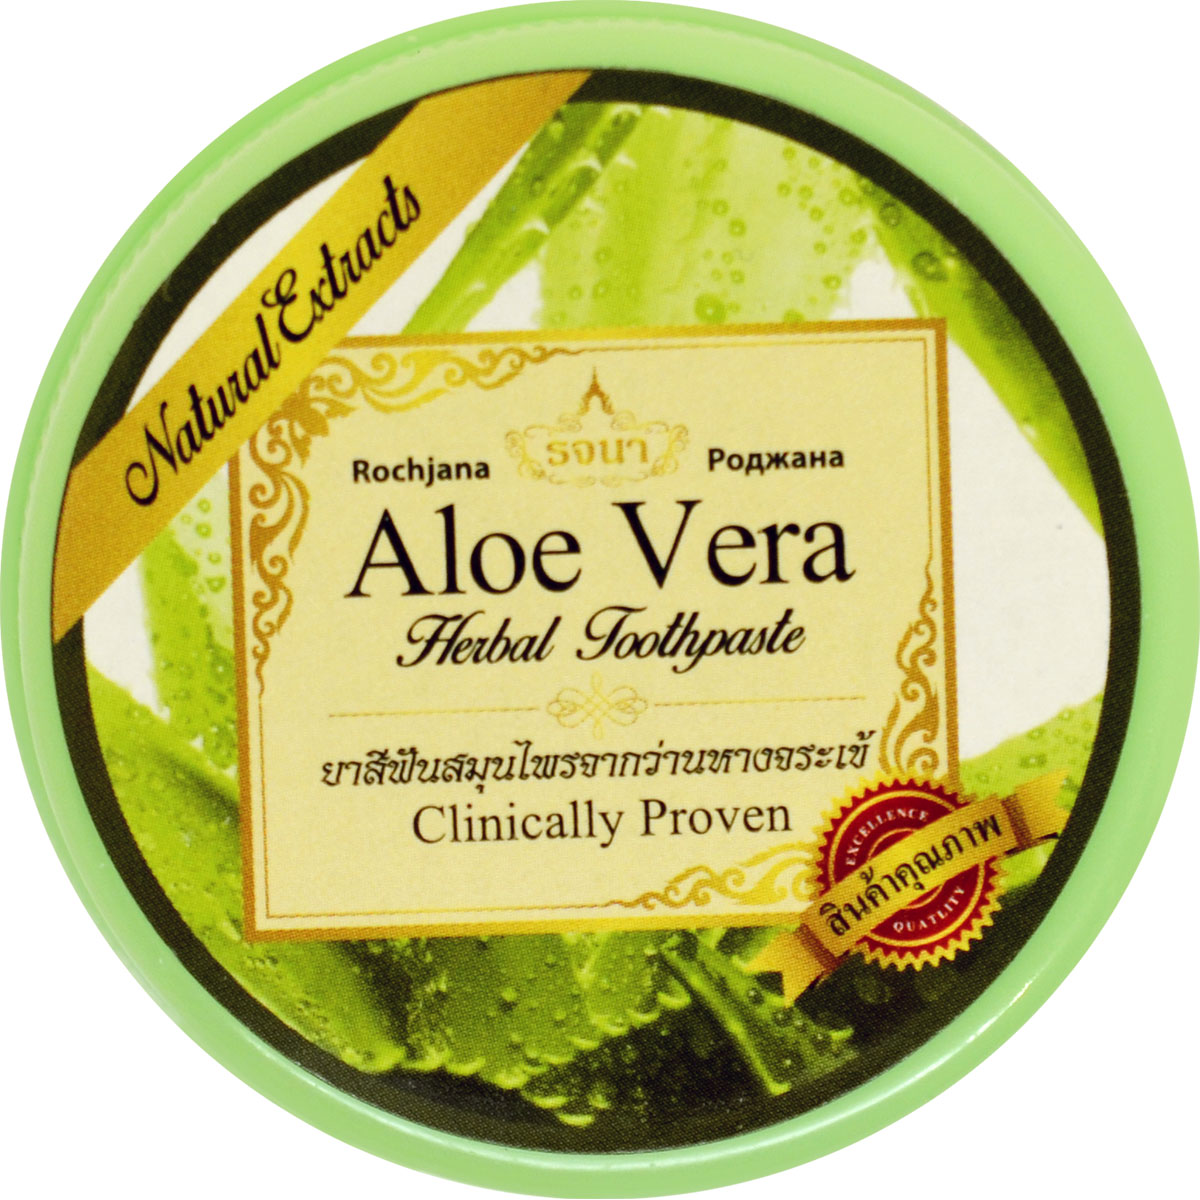 Тайская травяная зубная паста с экстрактом Алоэ Вера Rochjana, 30гр. зубная паста vitis aloe vera 100 мл